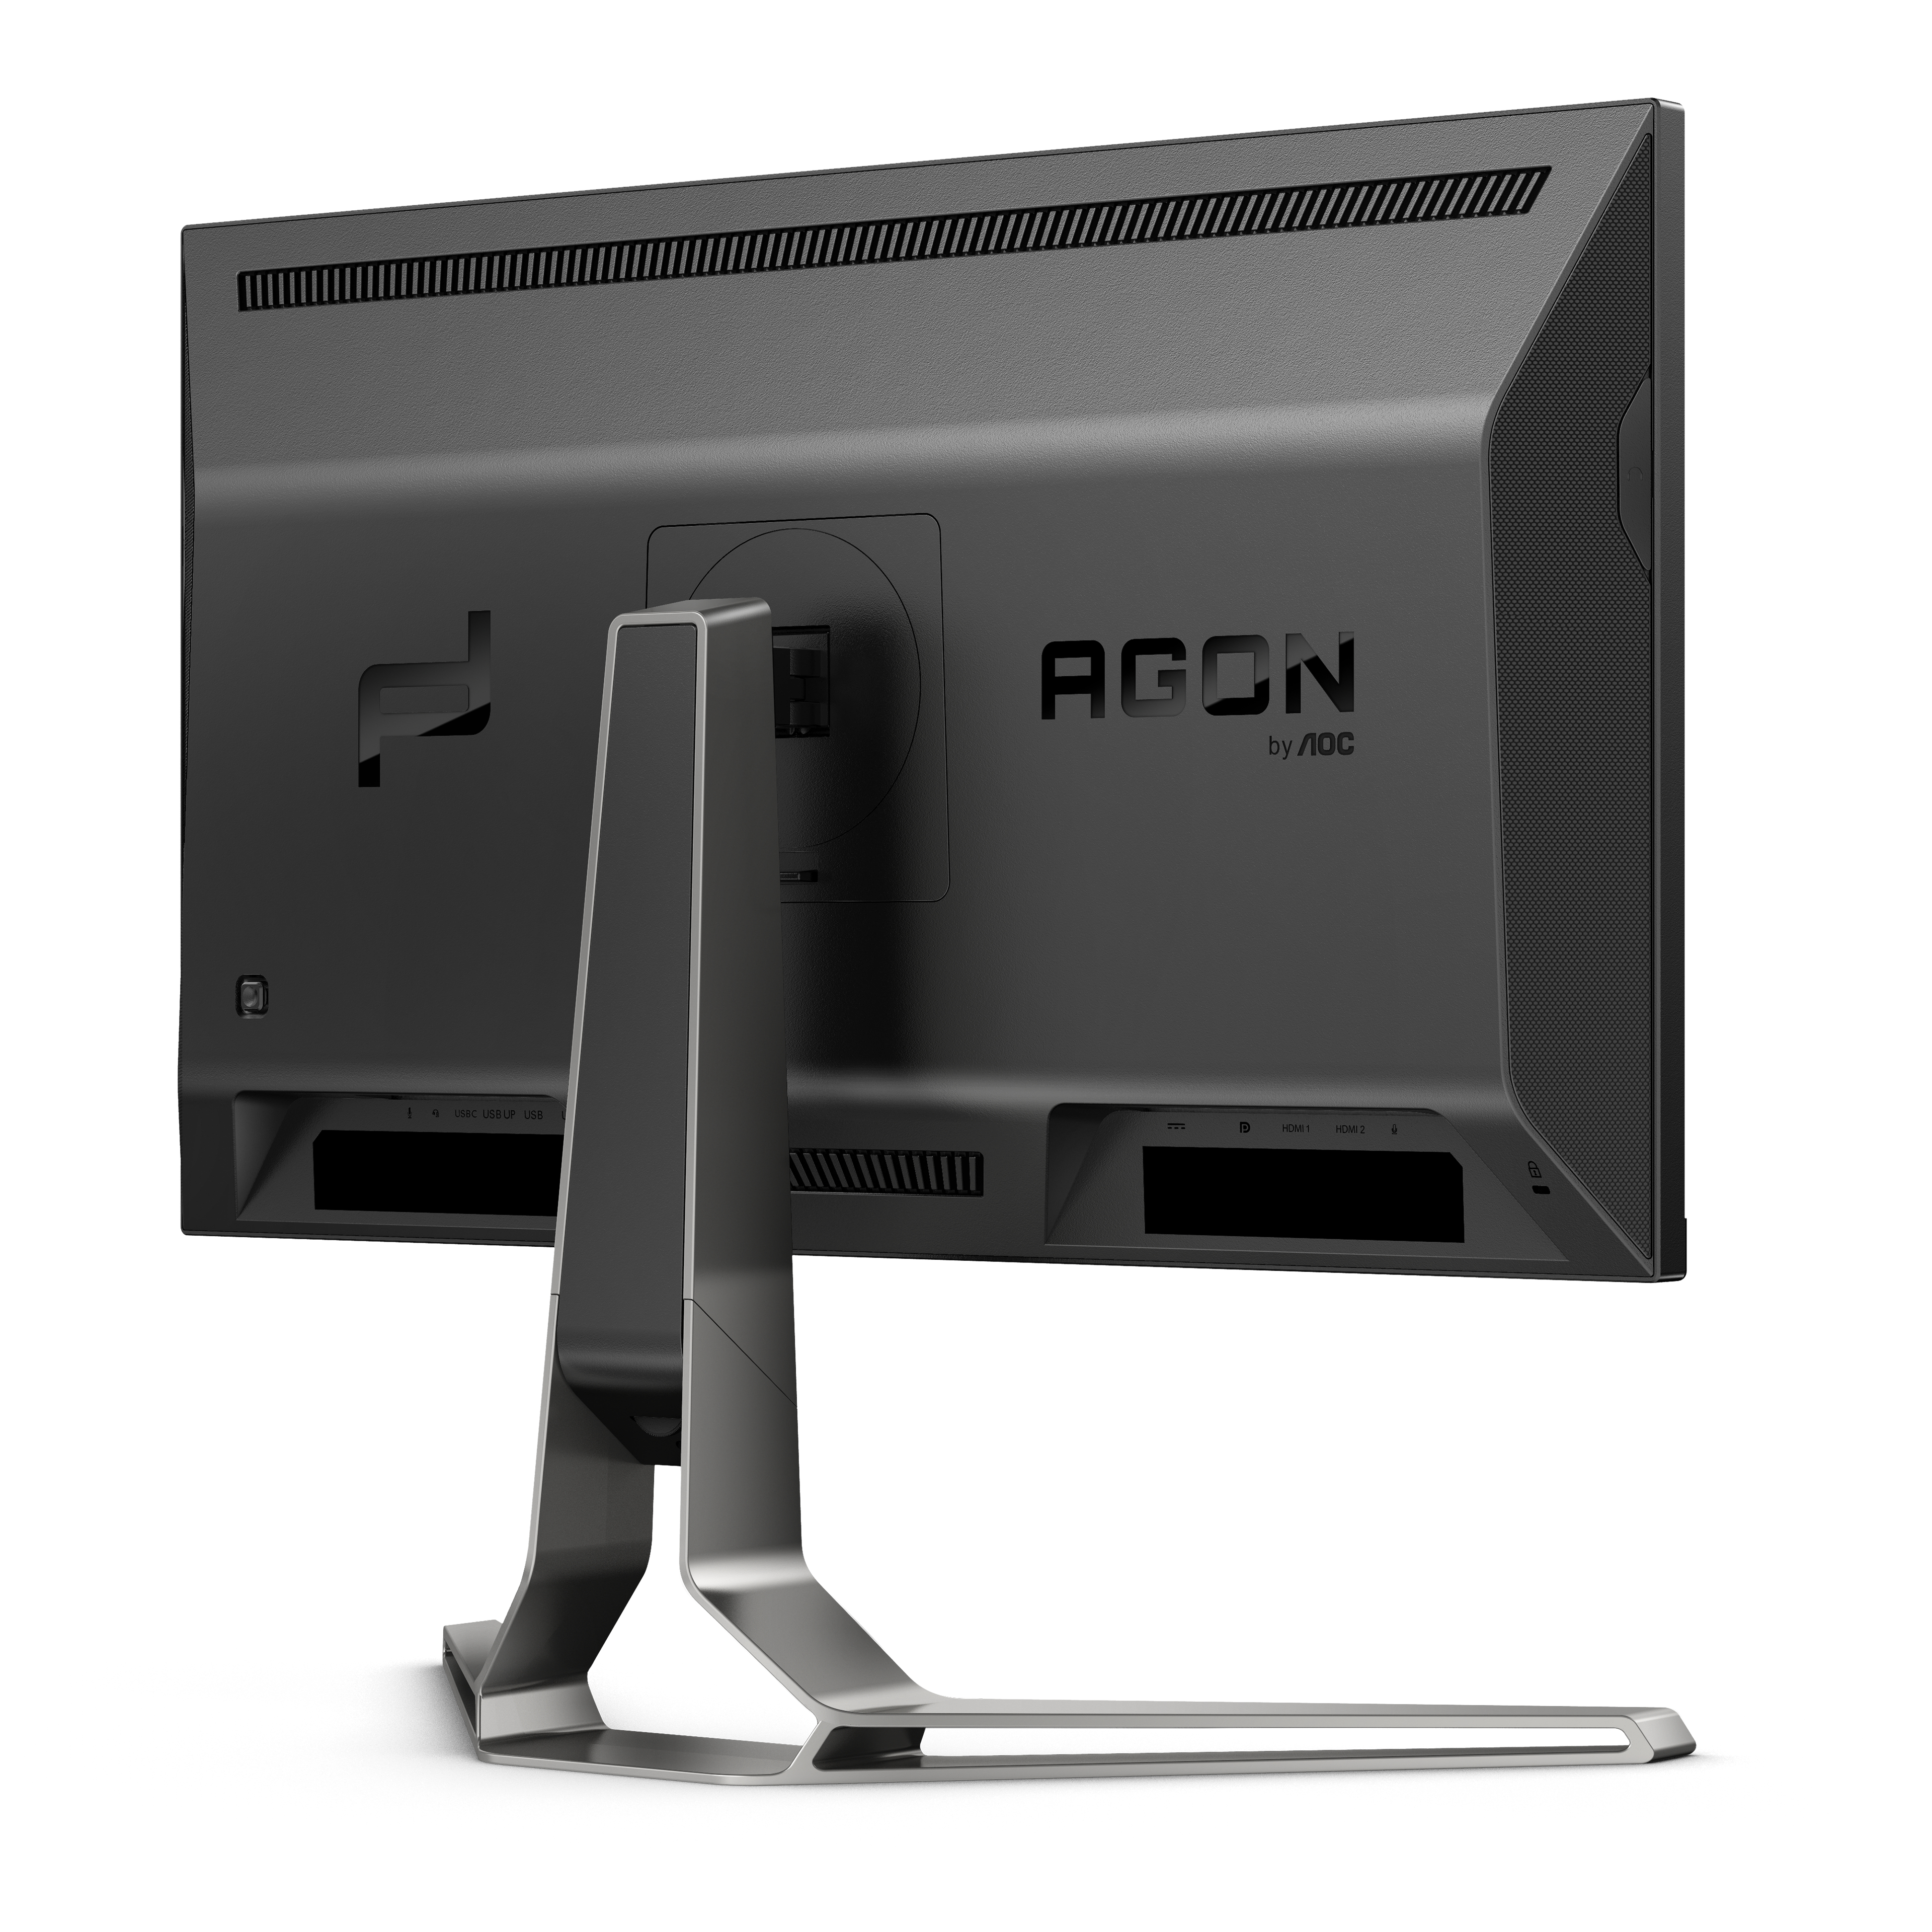 AOC - Monitor AOC AGON PRO Porche Design 31.5" PD32M Mini LED IPS 4K 144Hz 1ms USB-C (90W)